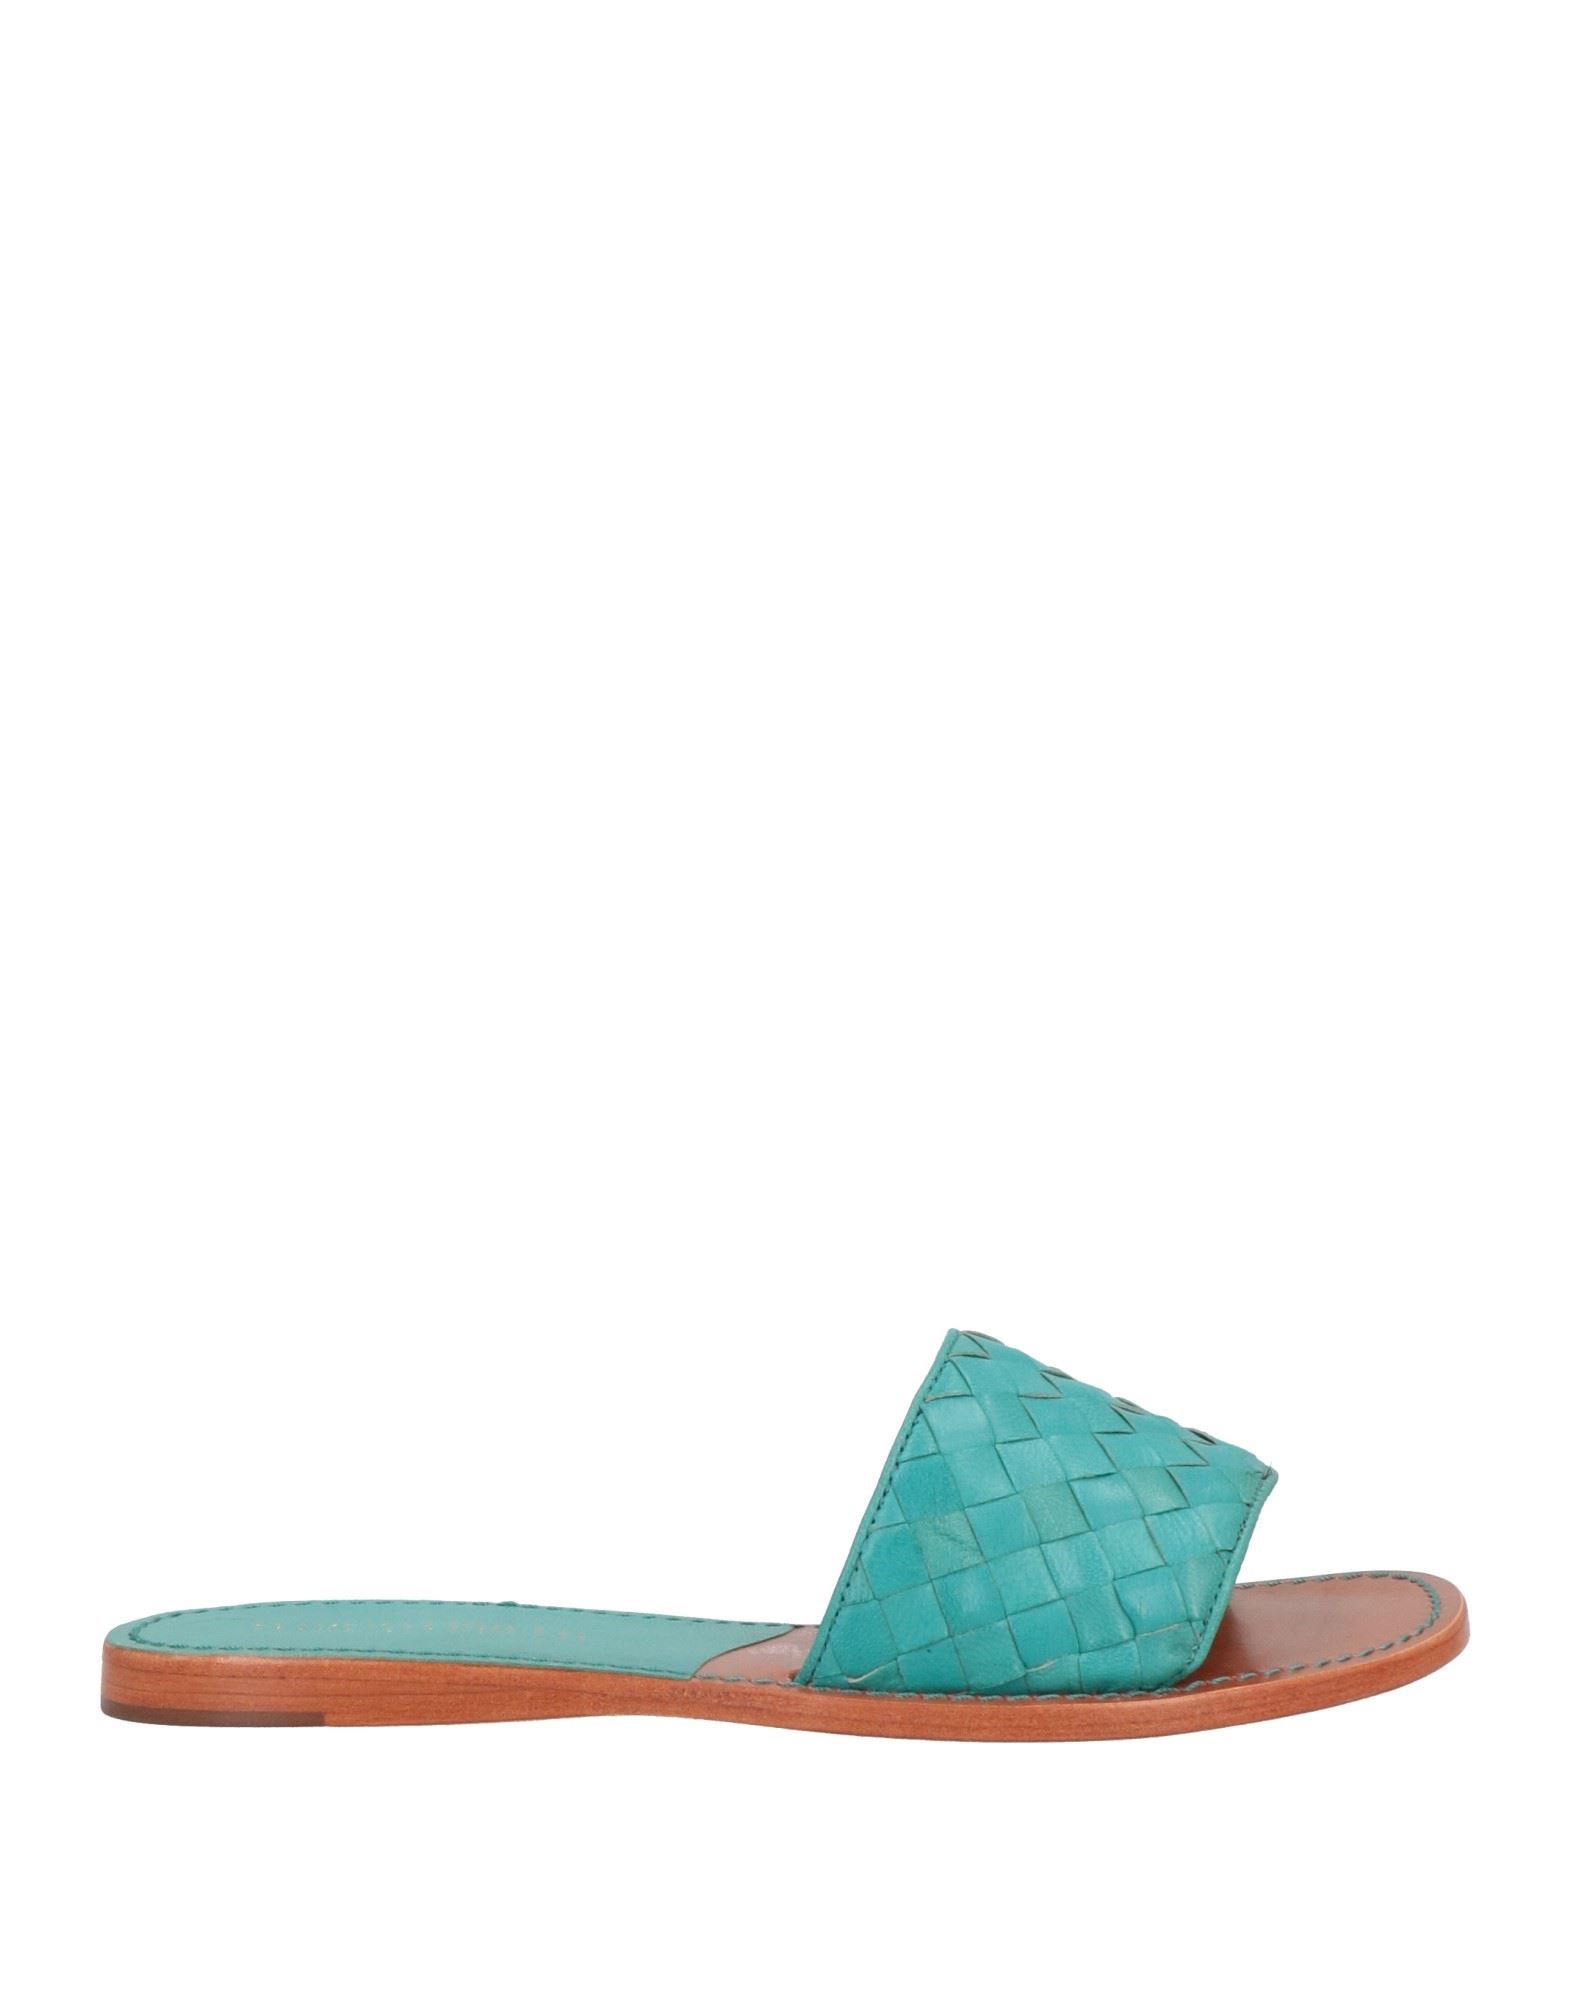 Marco Ferretti Sandals In Turquoise